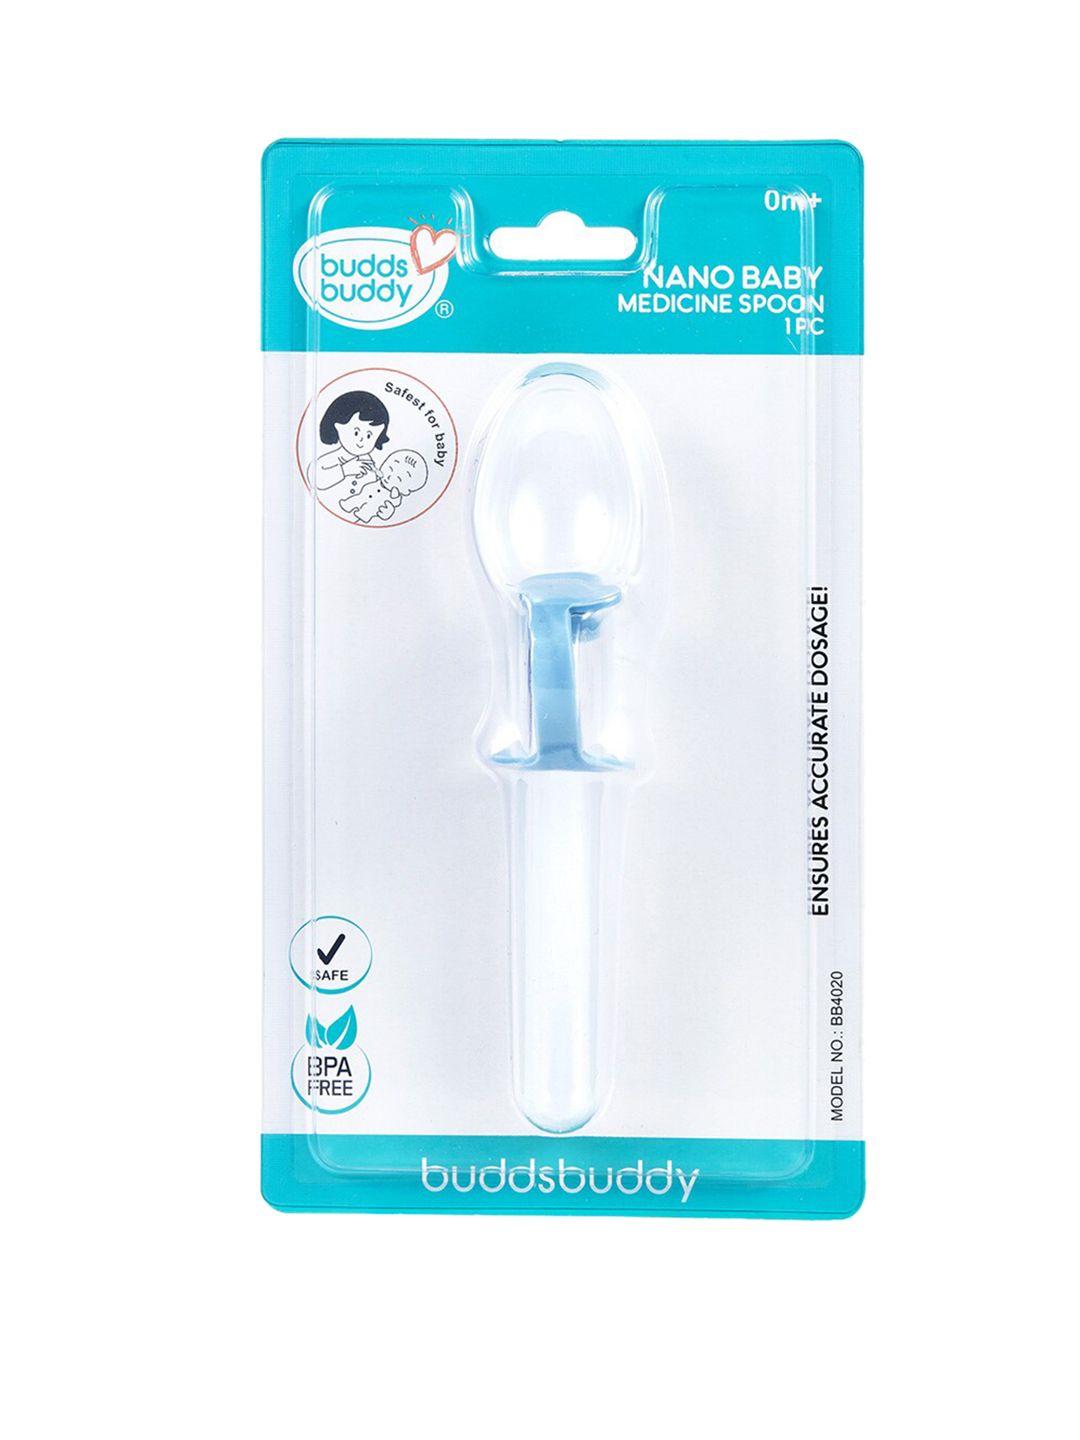 buddsbuddy blue new born baby medicine spoon